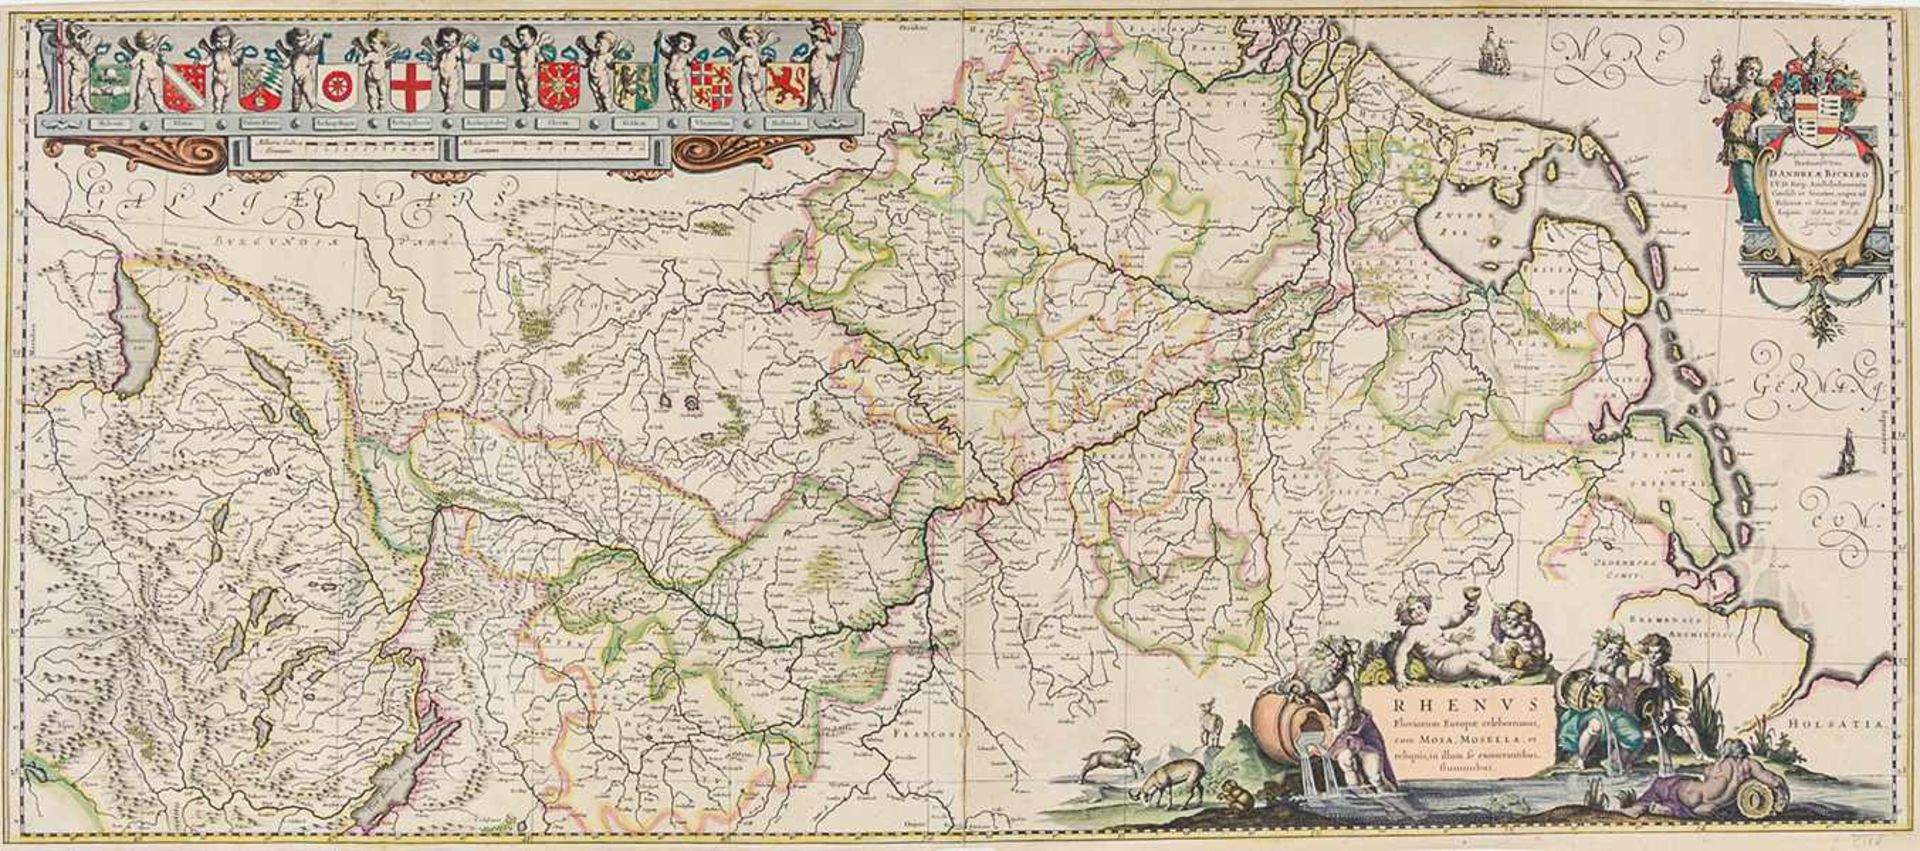 Karten - Rheinlauf - - Blaeu, Willem. Rhenus Fluviorum Europae celeberrimus, cum Mosa, Mosella, et